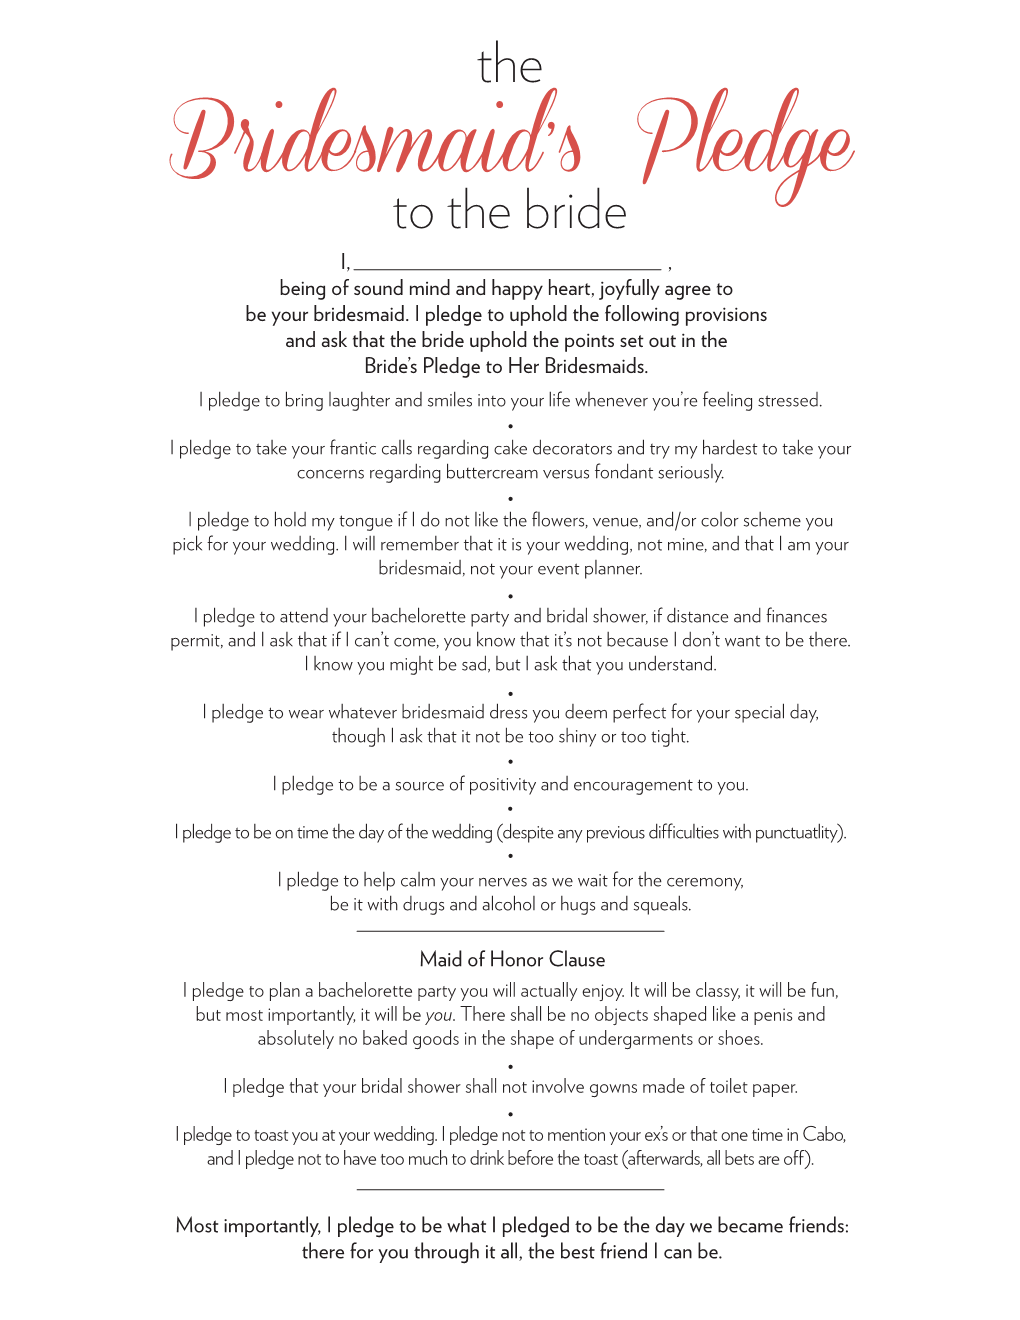 The Bridesmaid's Pledge to the Bride